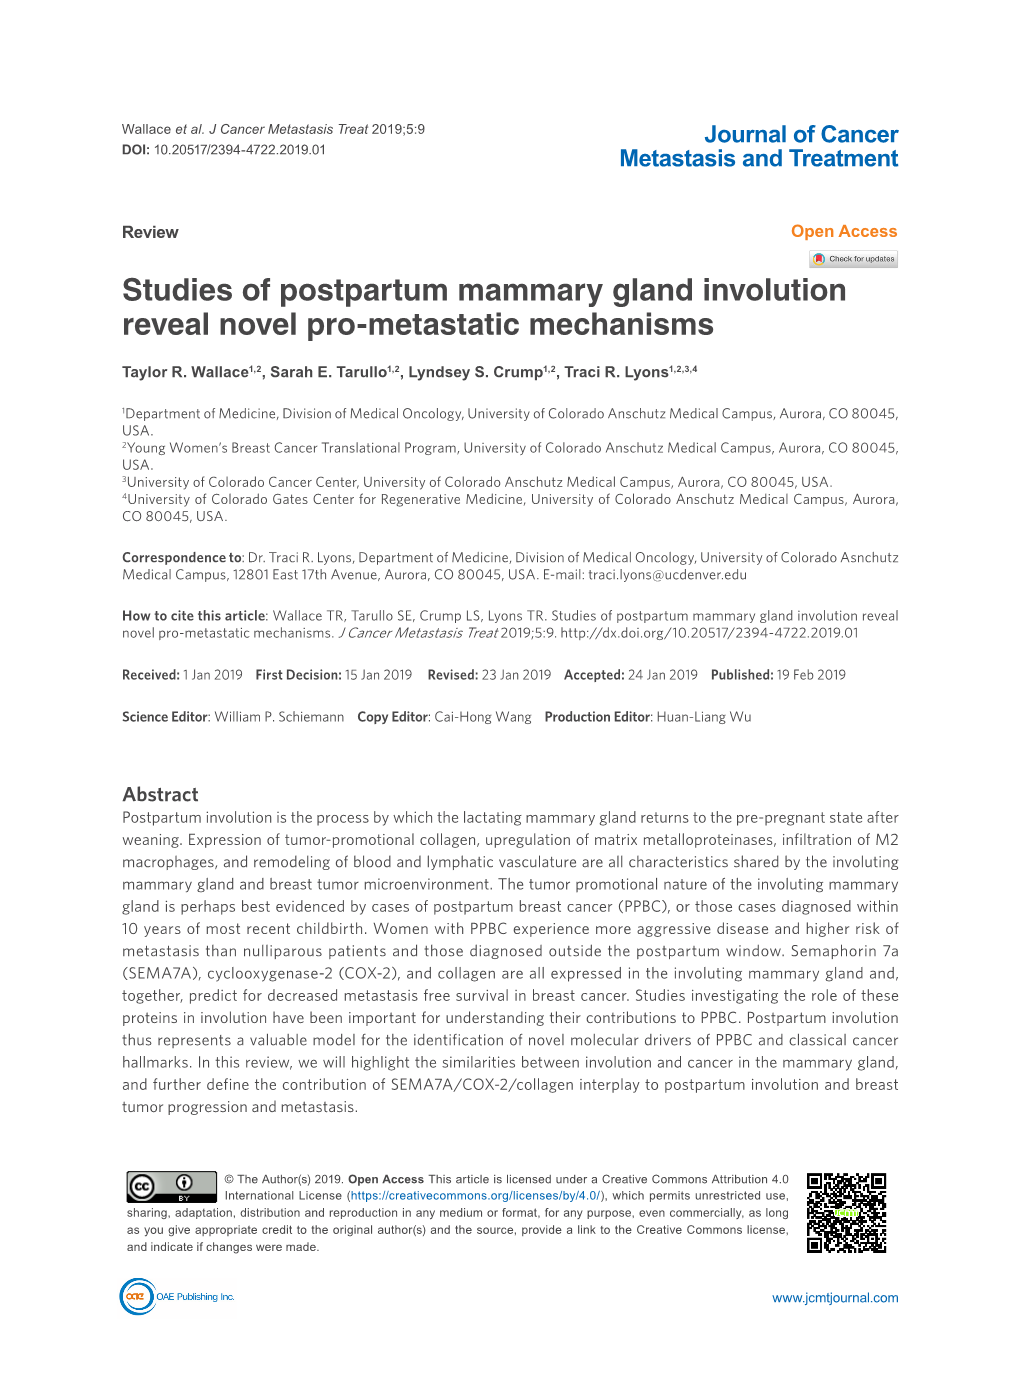 Studies of Postpartum Mammary Gland Involution Reveal Novel Pro-Metastatic Mechanisms